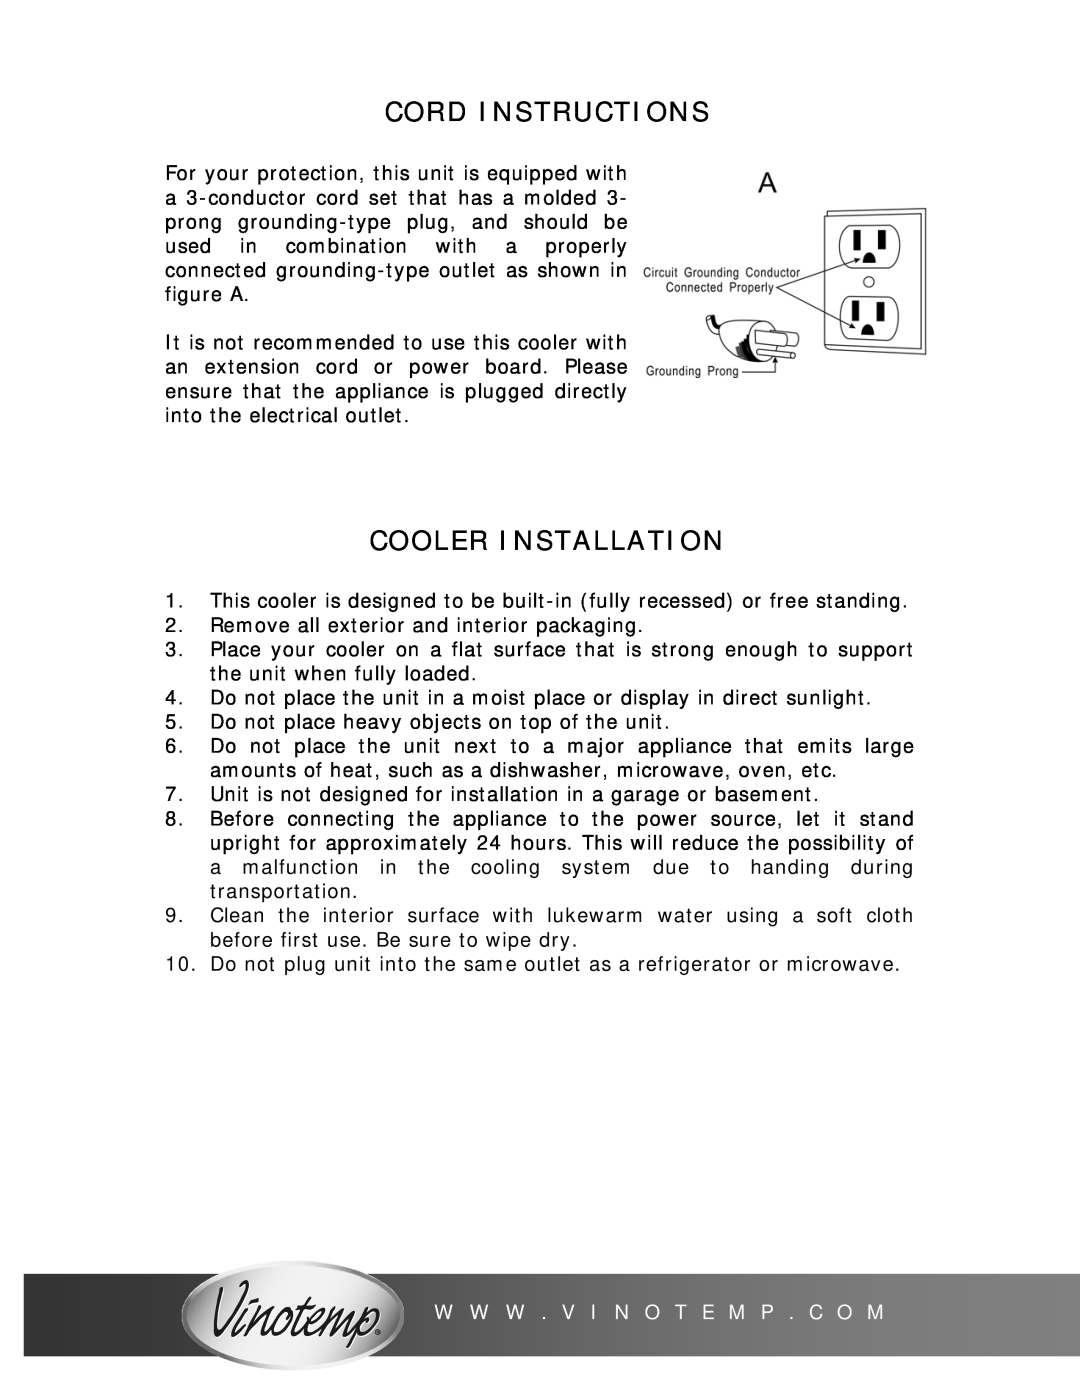 Vinotemp VT-38 owner manual Cord Instructions, Cooler Installation, W W W . V I N O T E M P . C O M 